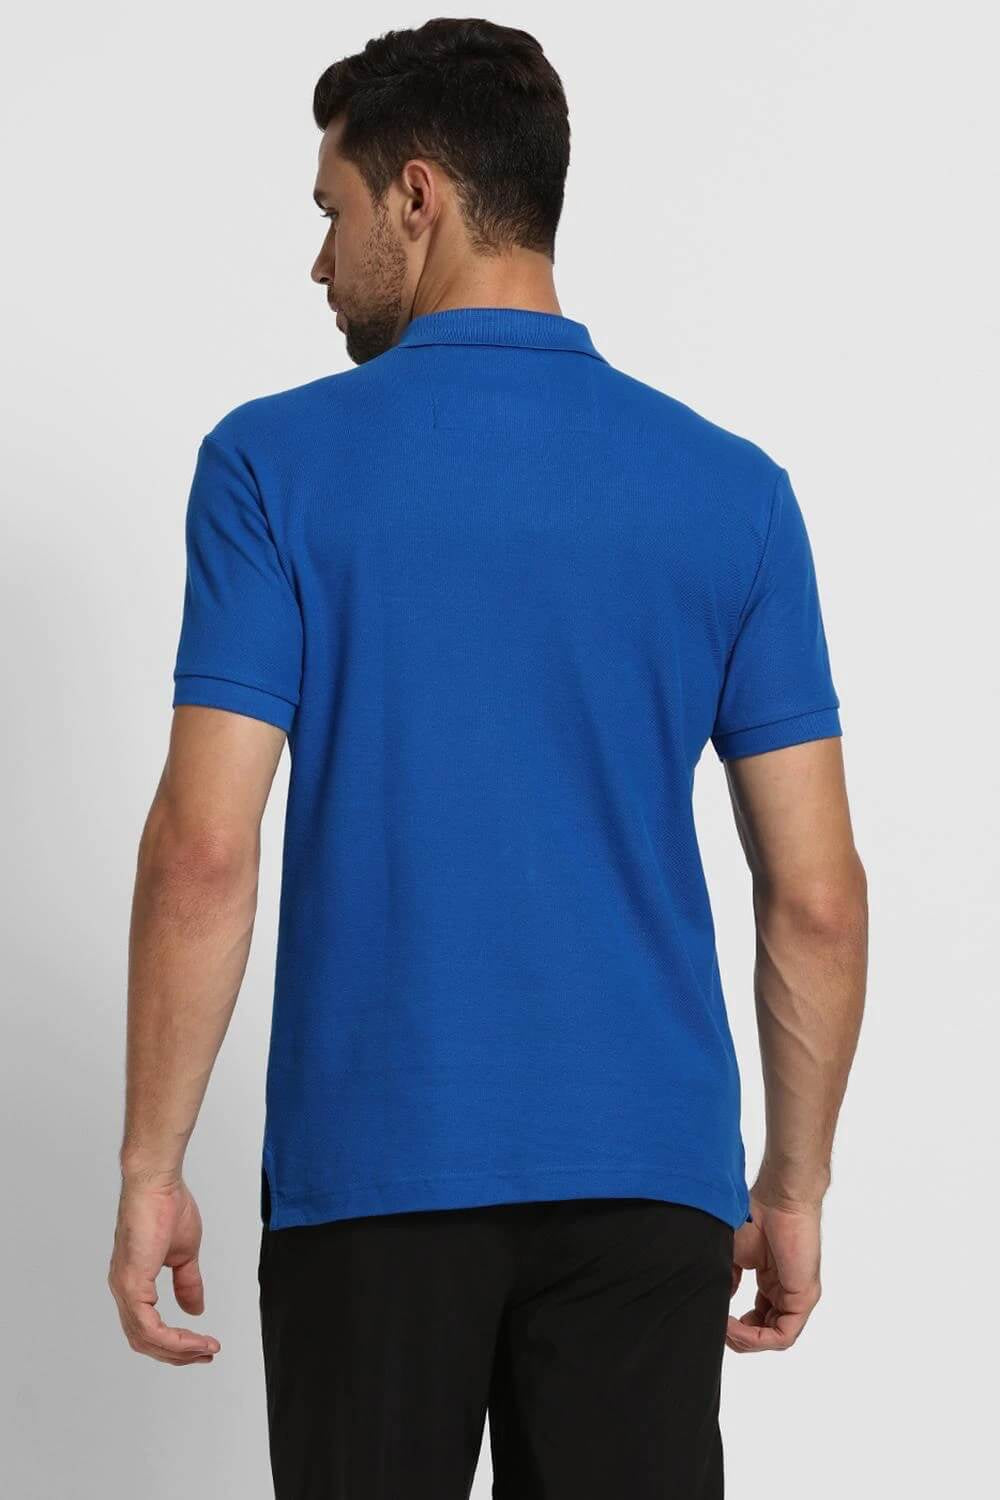 Van Heusen Blue Polo Tshirt for Men #60032